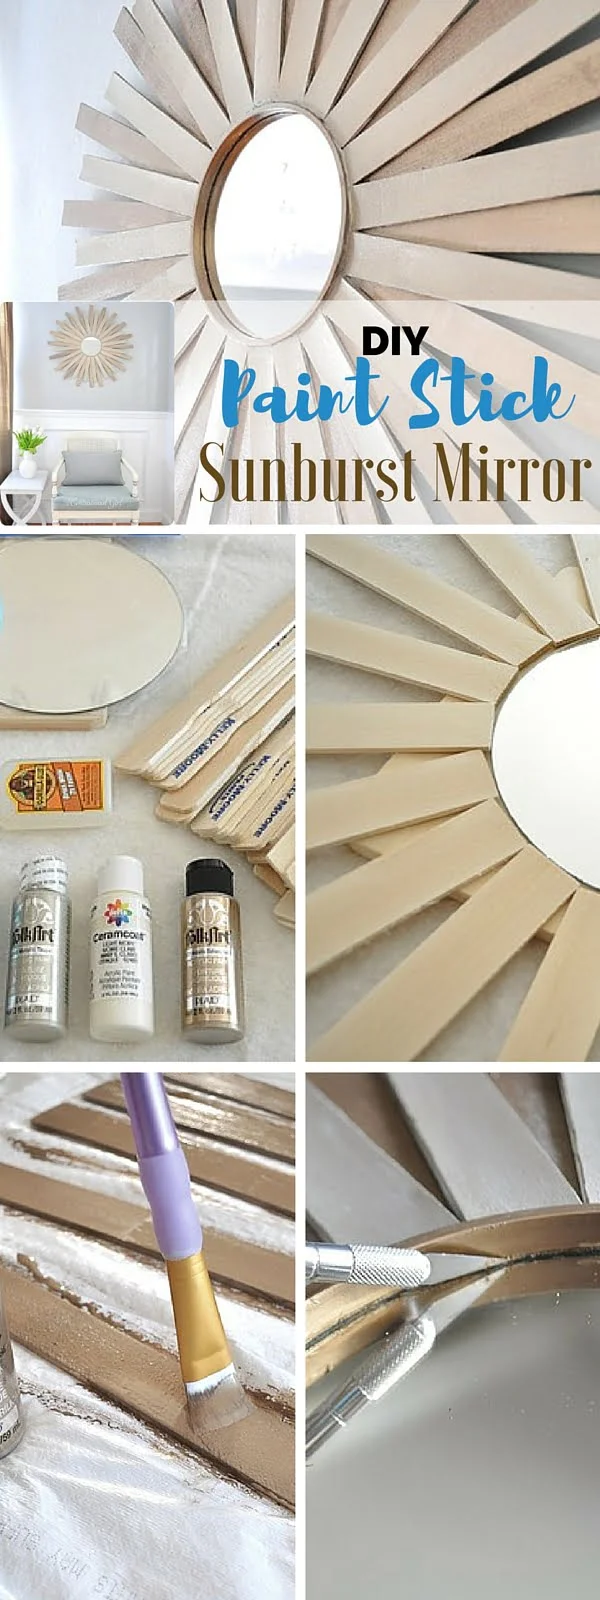 Check out the tutorial:  Paint Stick Sunburst Mirror